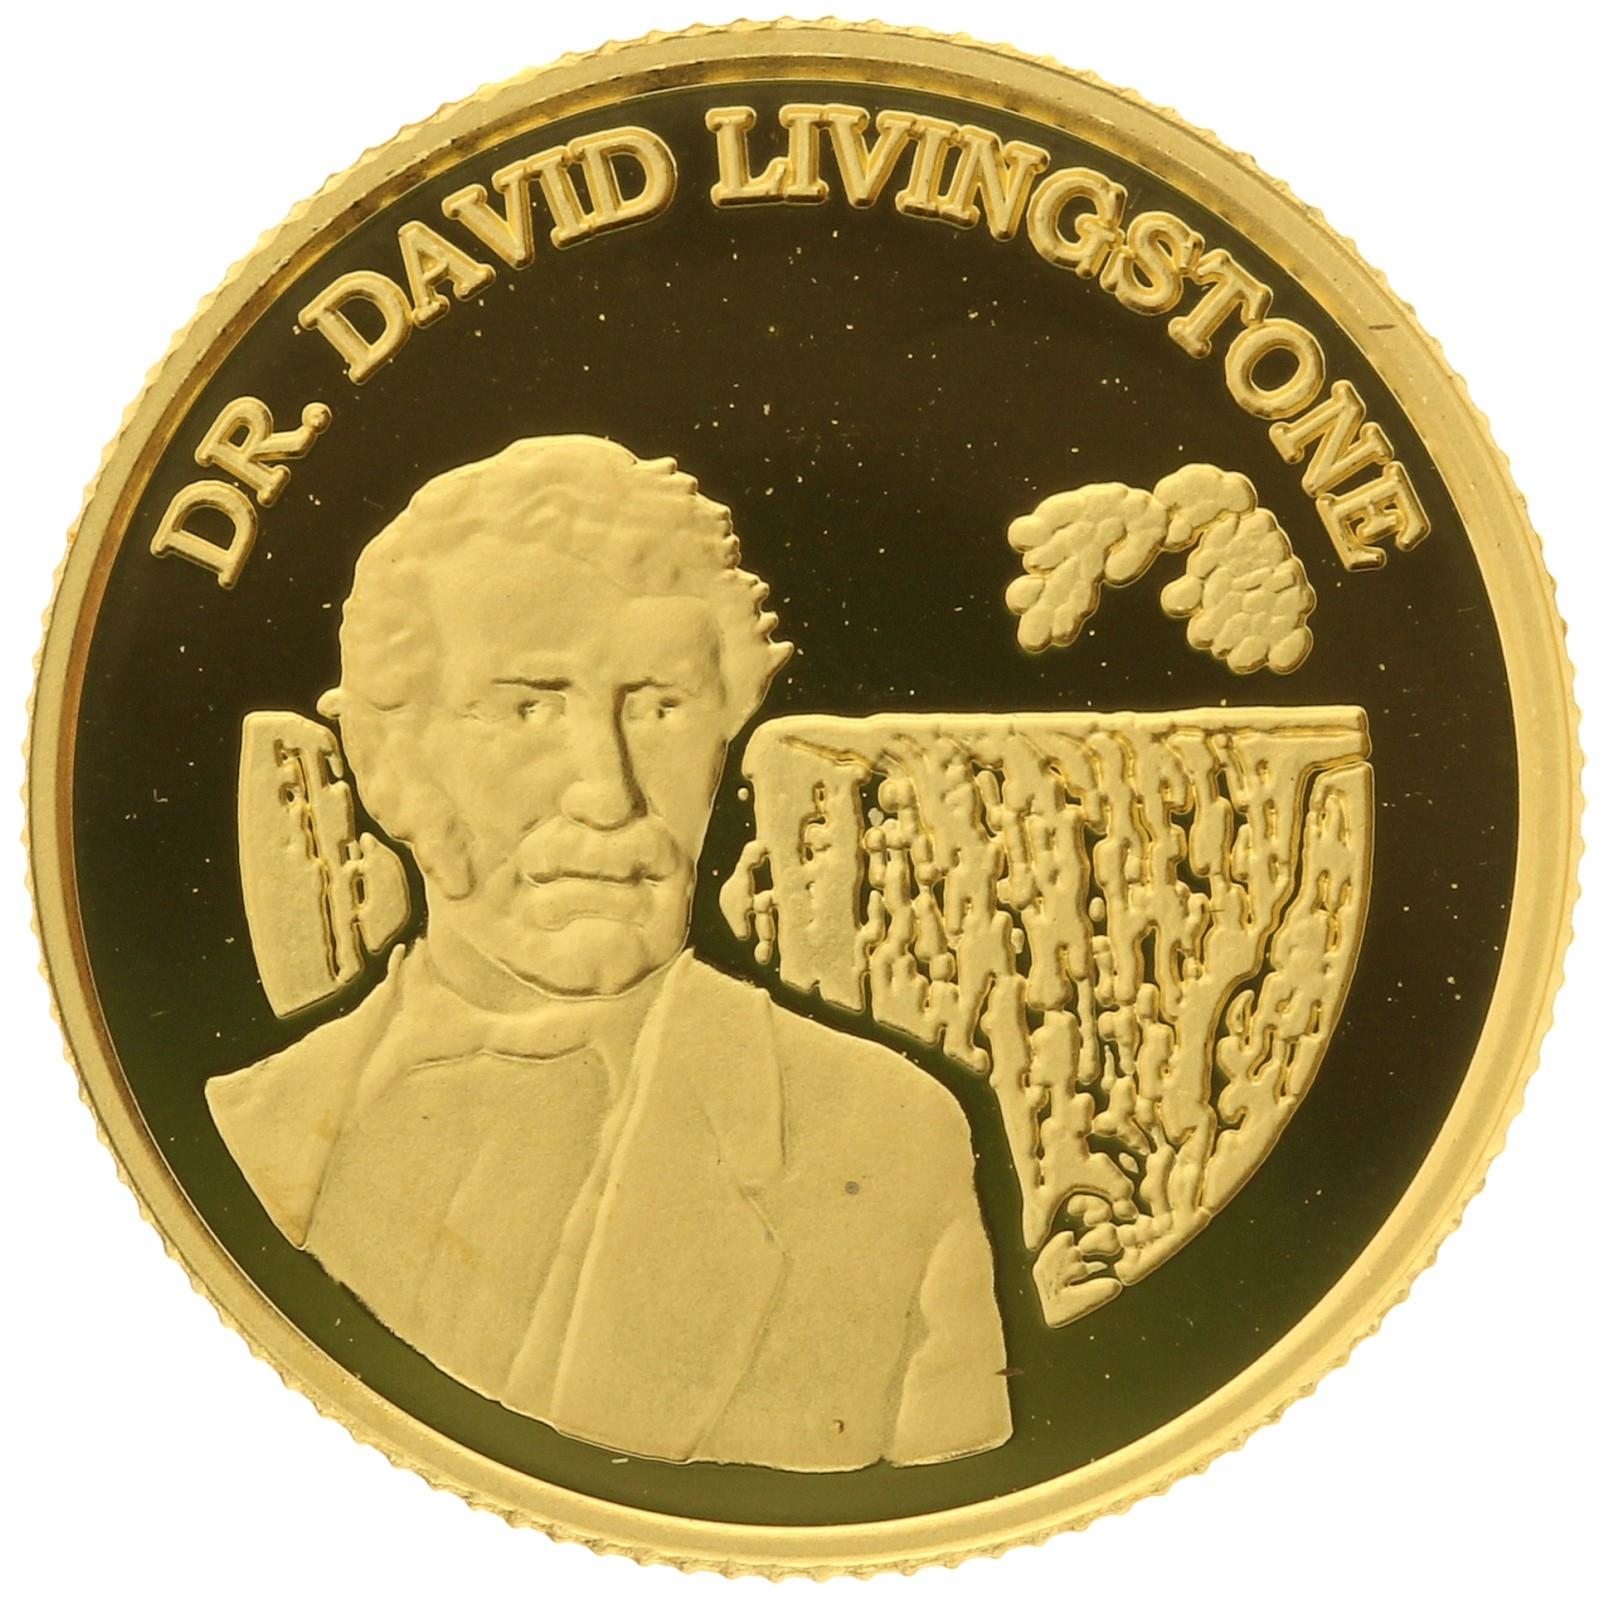 Zambia - 500 Kwacha - 1999 - Dr. David Livingstone - 1/25oz